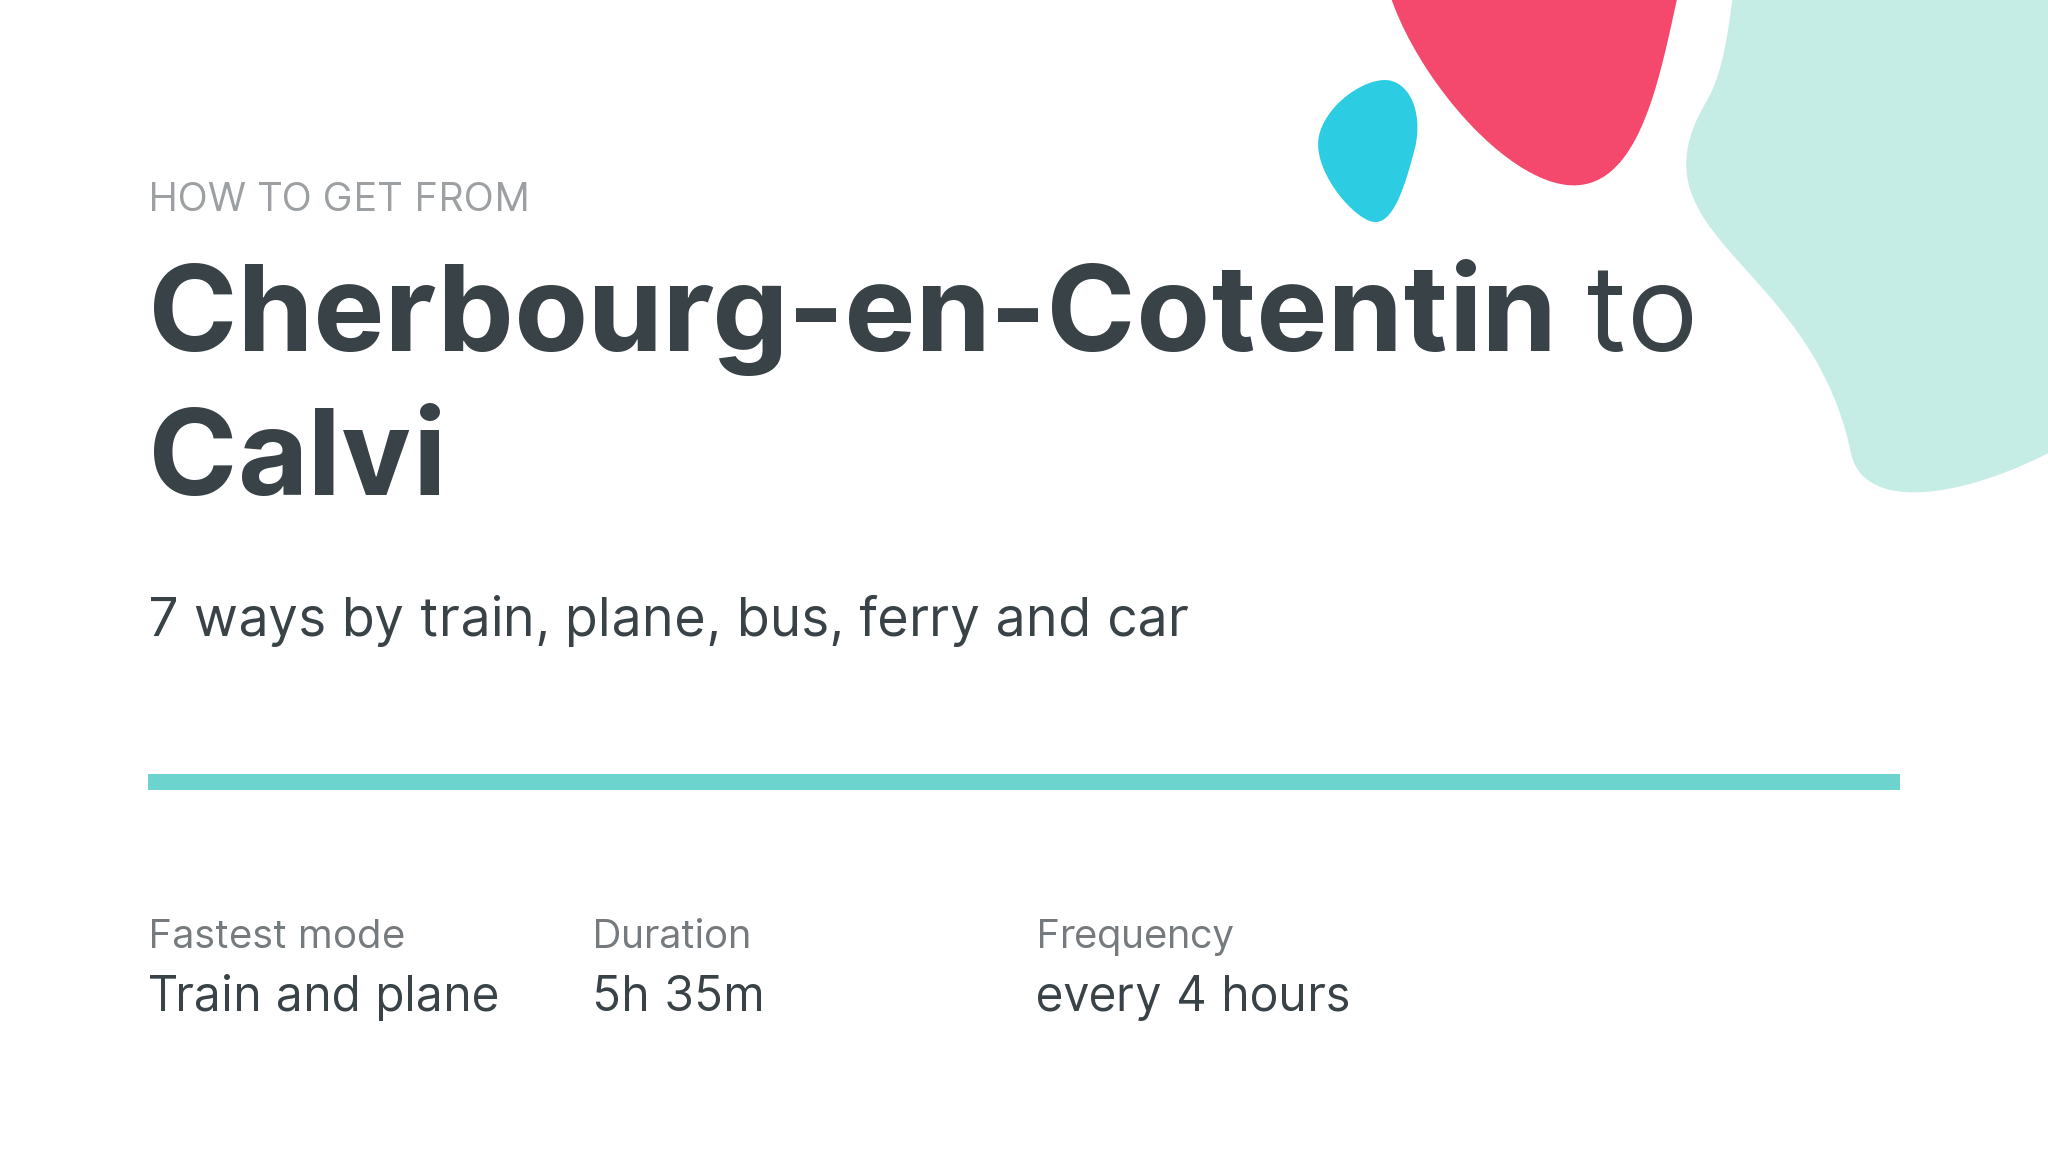 How do I get from Cherbourg-en-Cotentin to Calvi